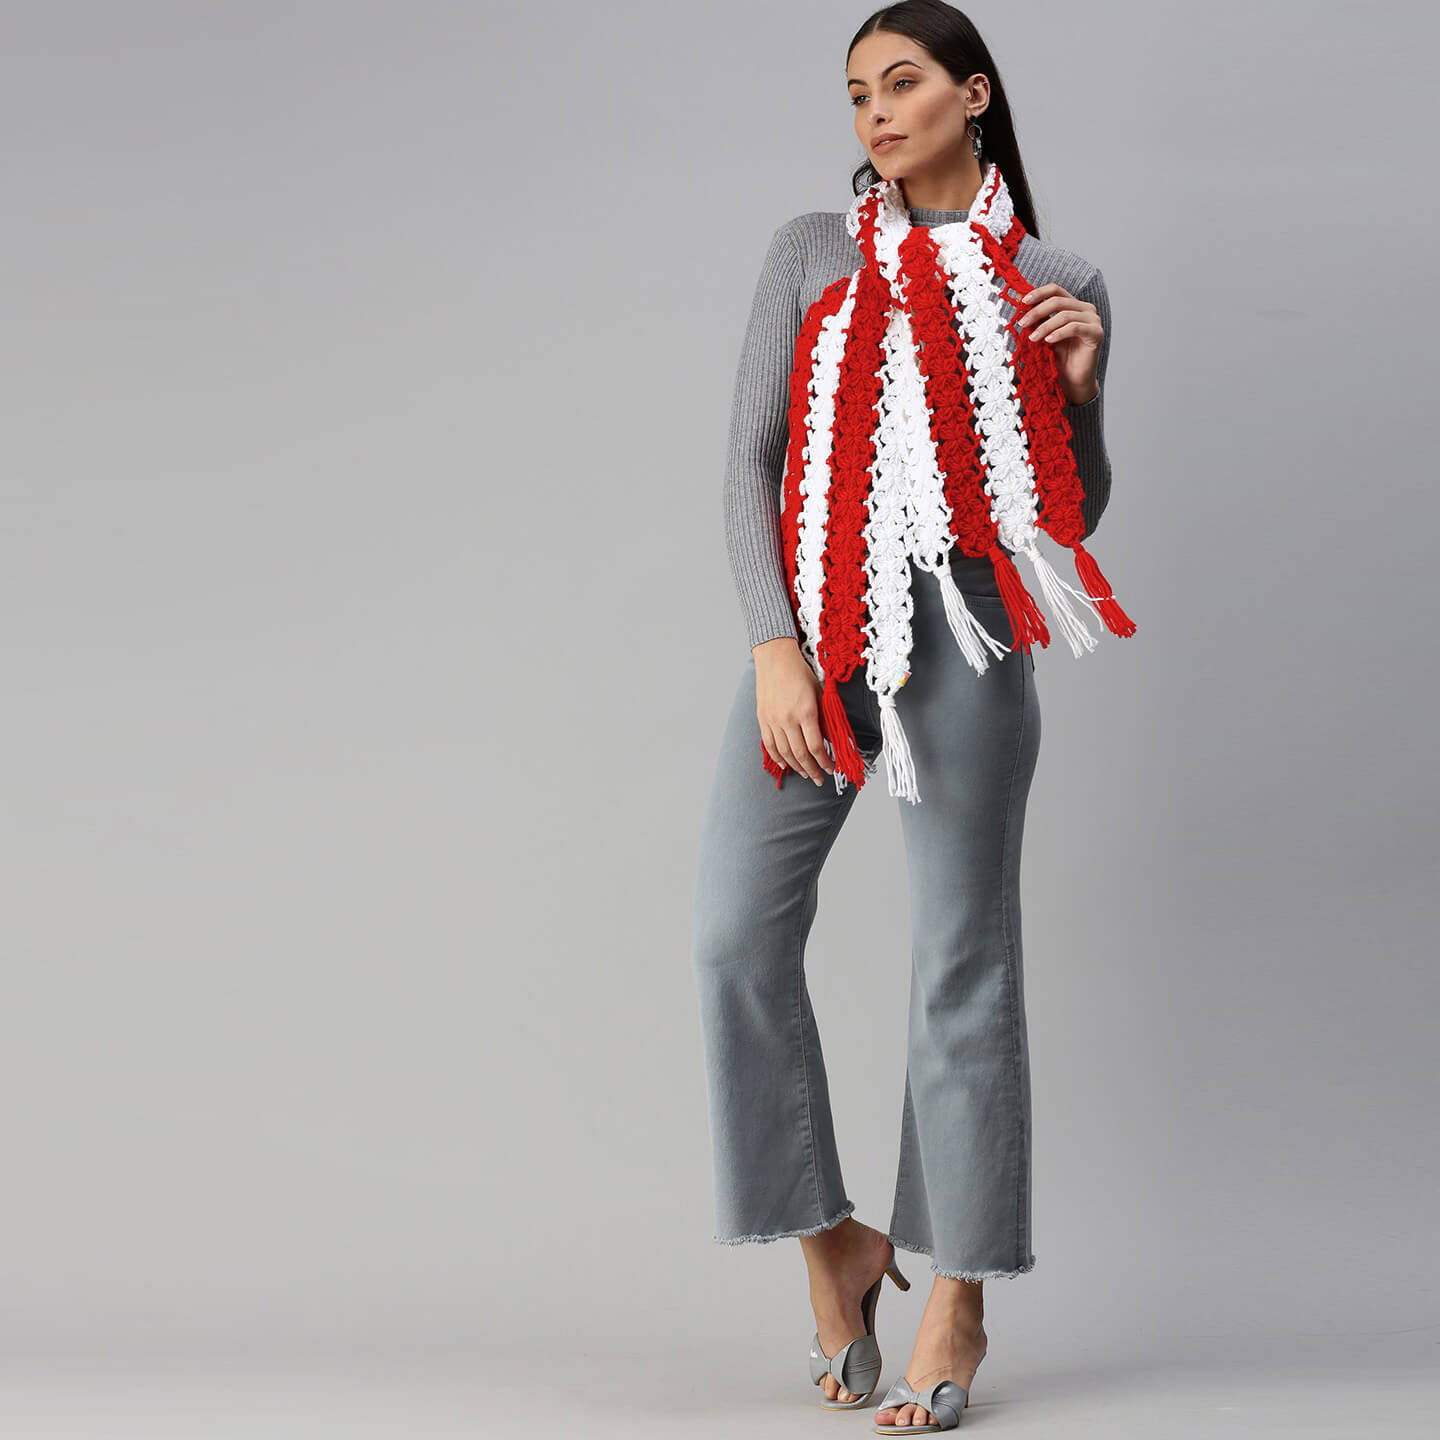 Flower Striped Crochet Scarf - Red, White 2863